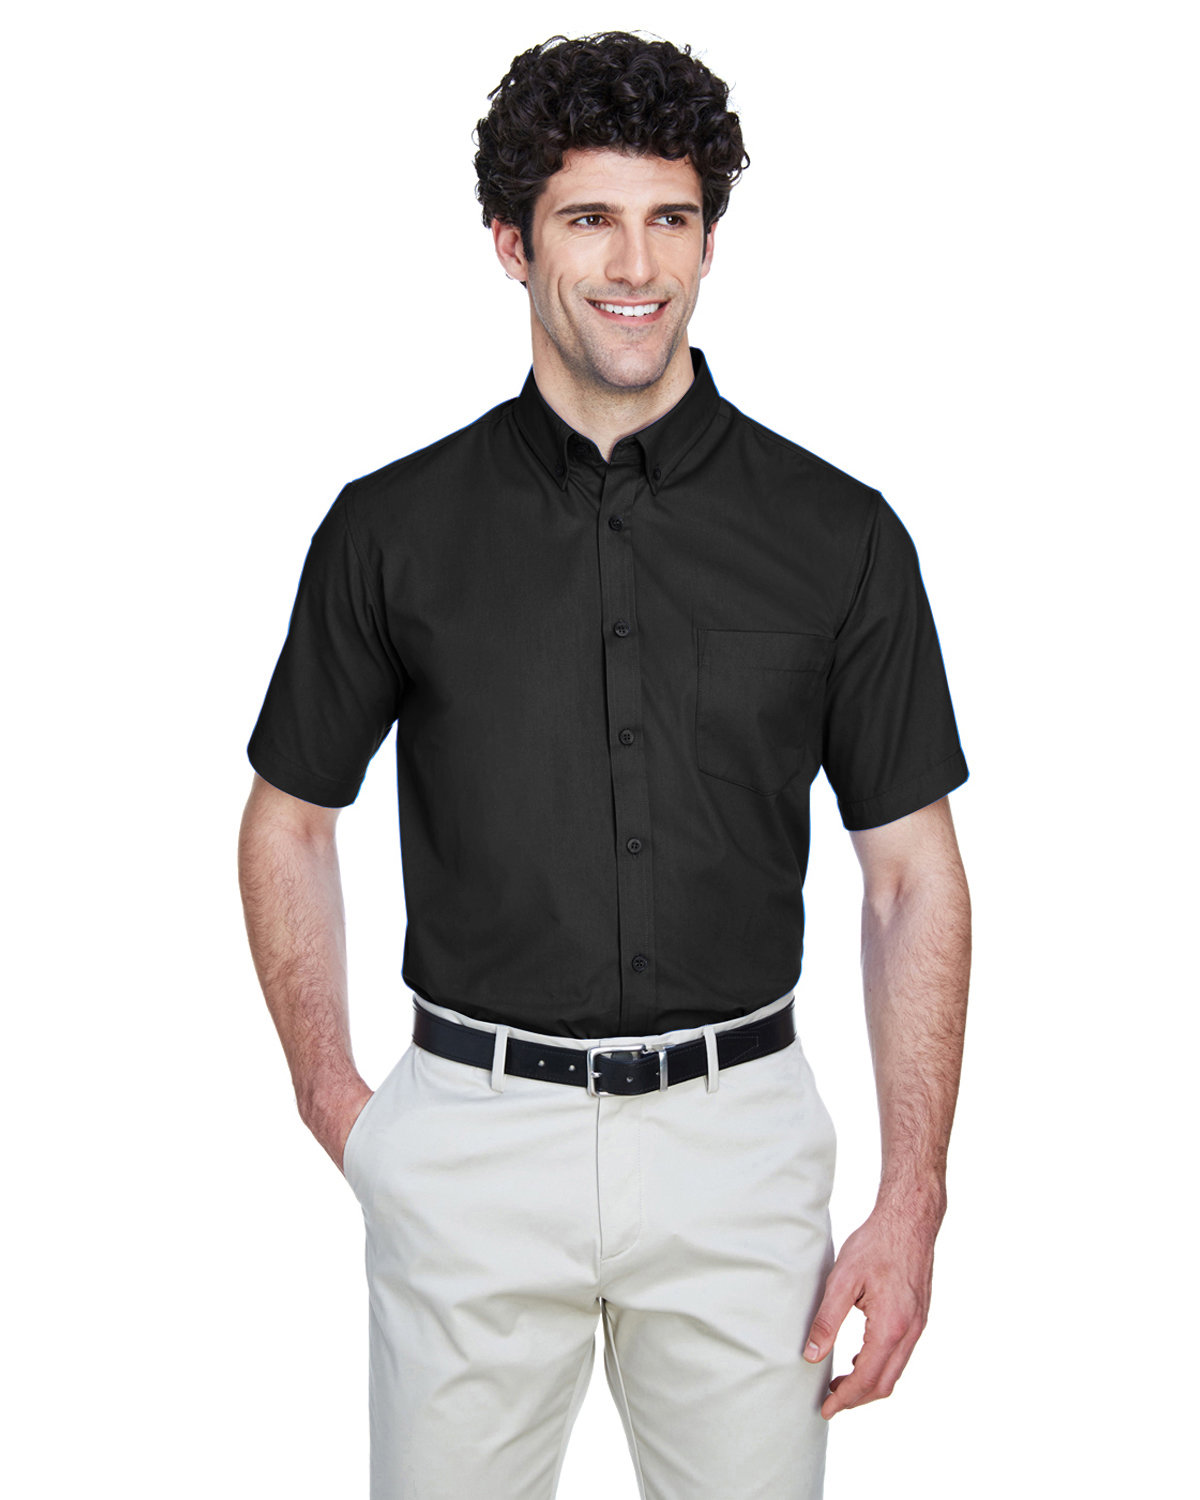 CORE365 Men's Optimum Short-Sleeve Twill Shirt black 